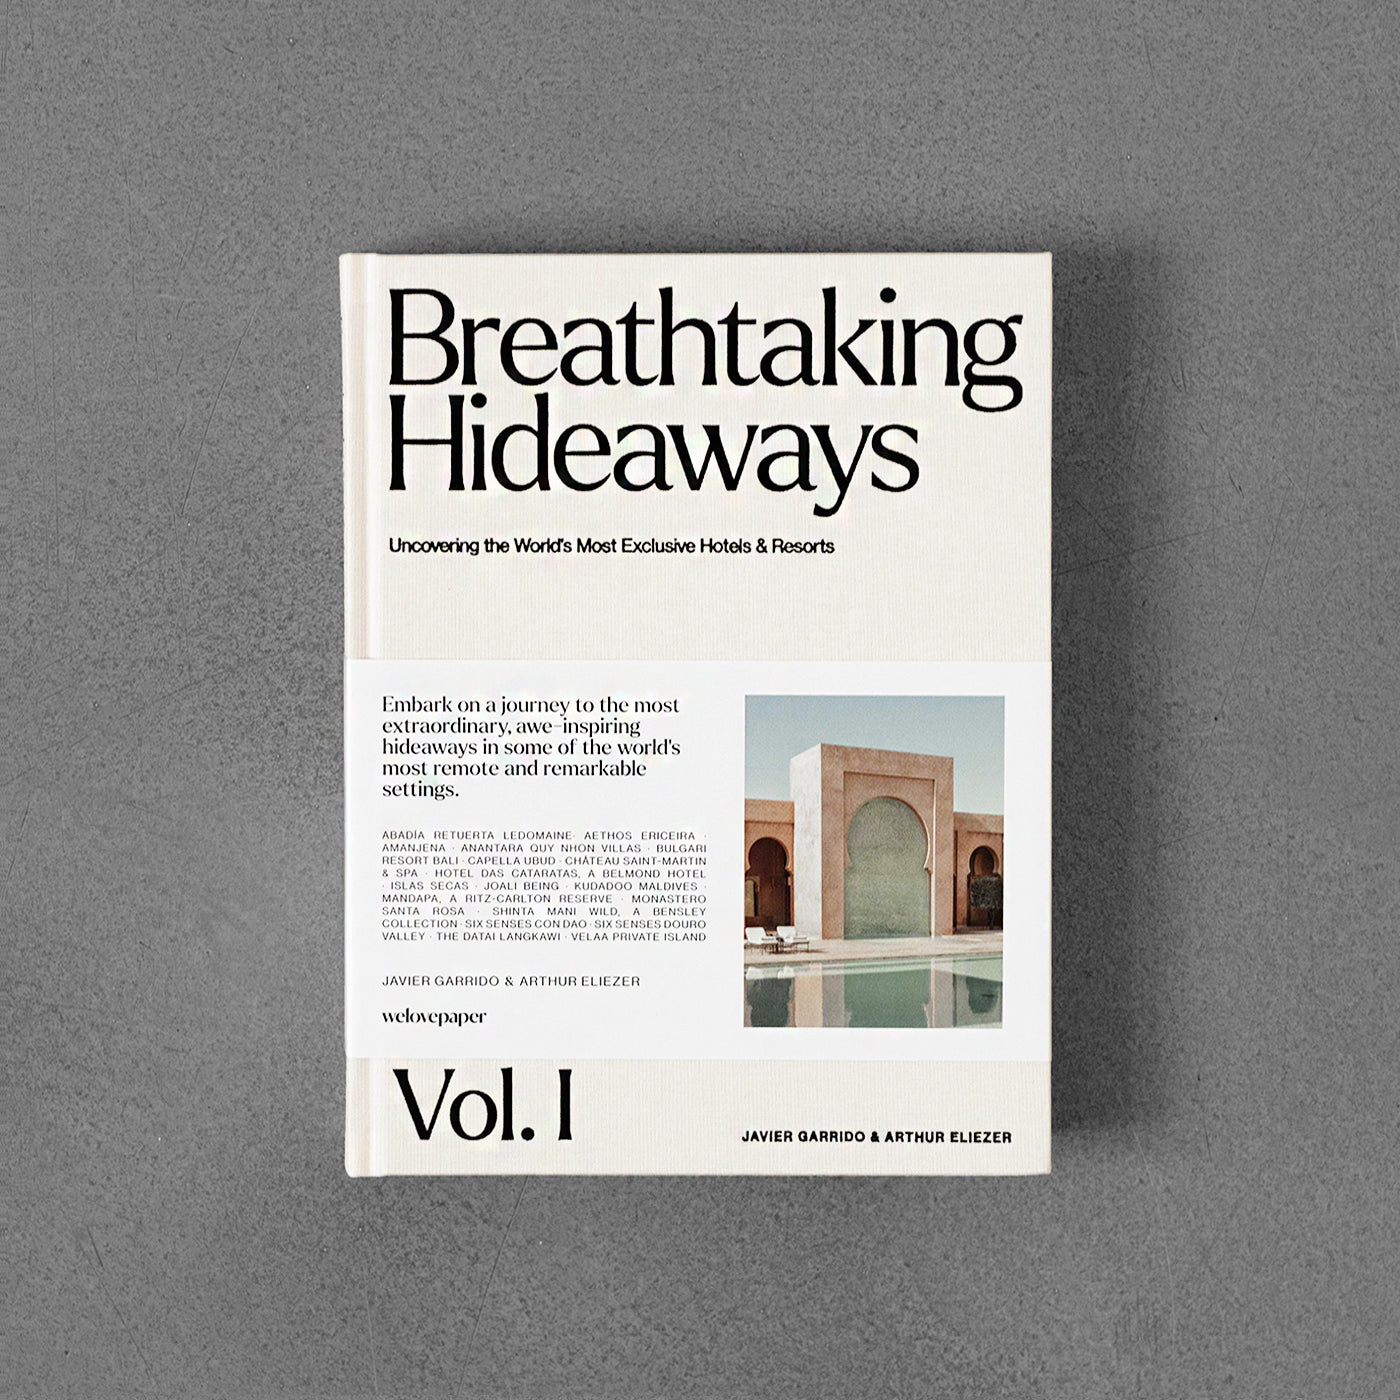 Breathtaking Hideaways Vol. I